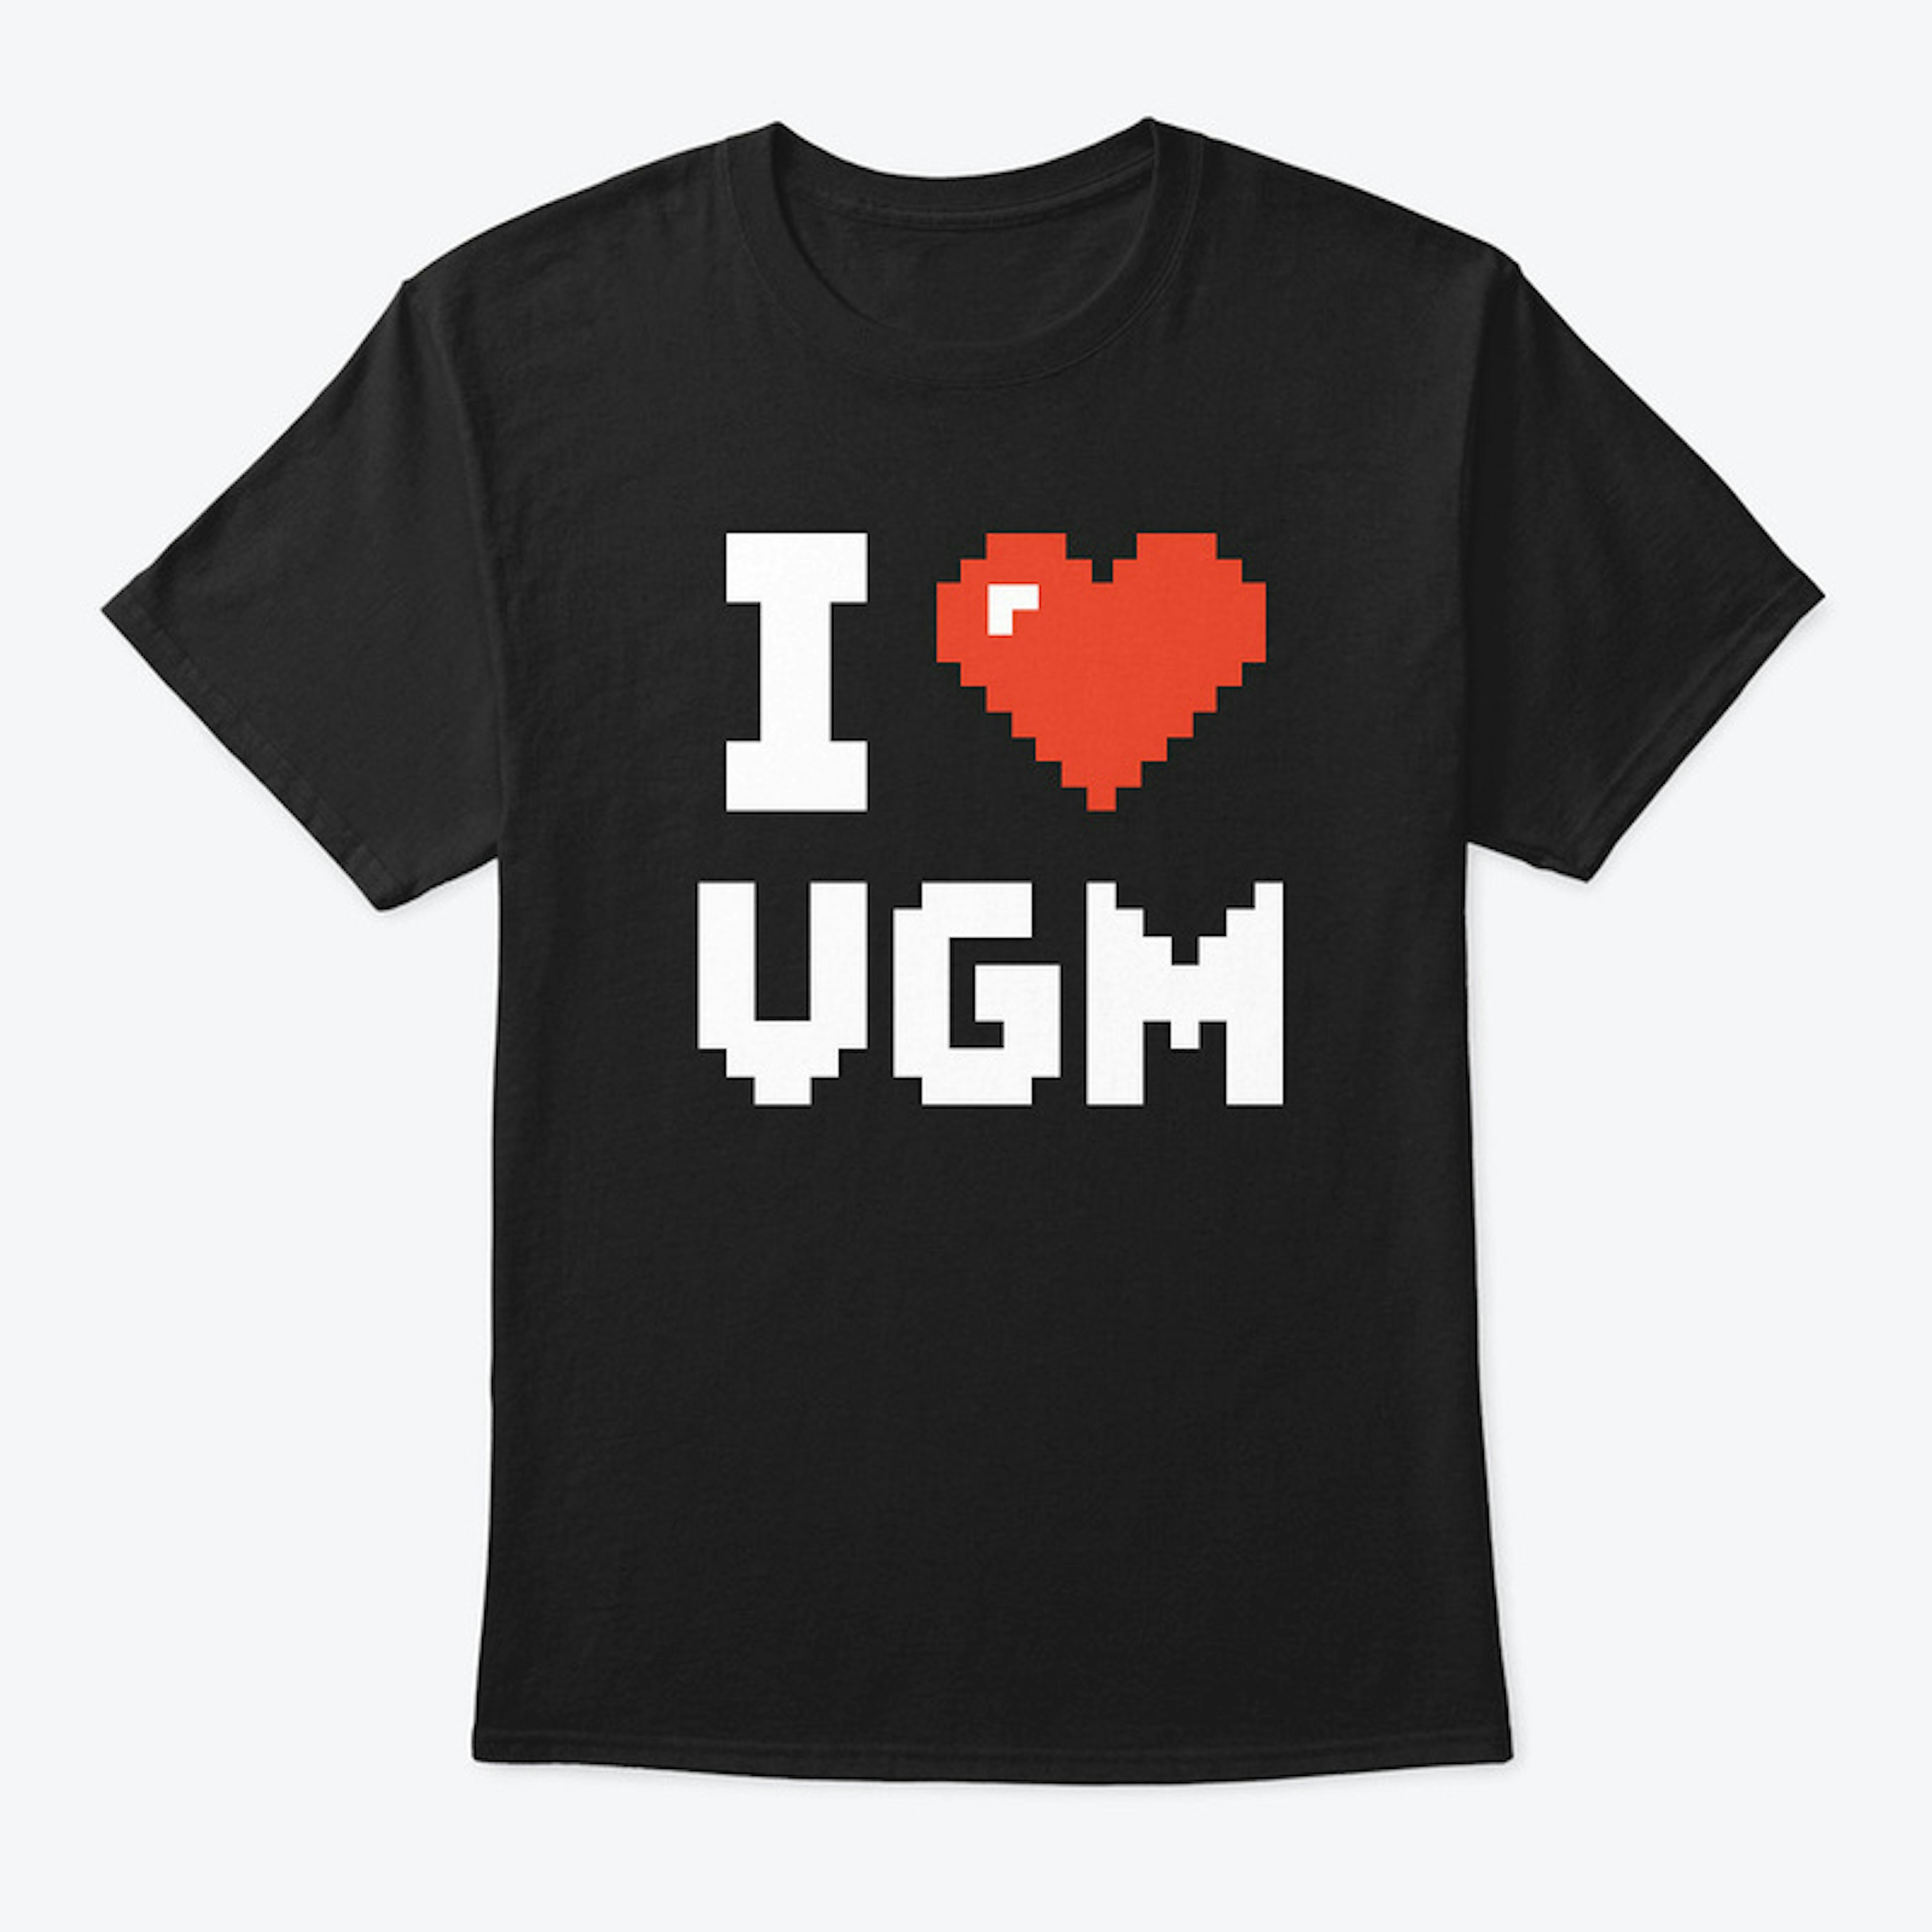 I LOVE VGM!